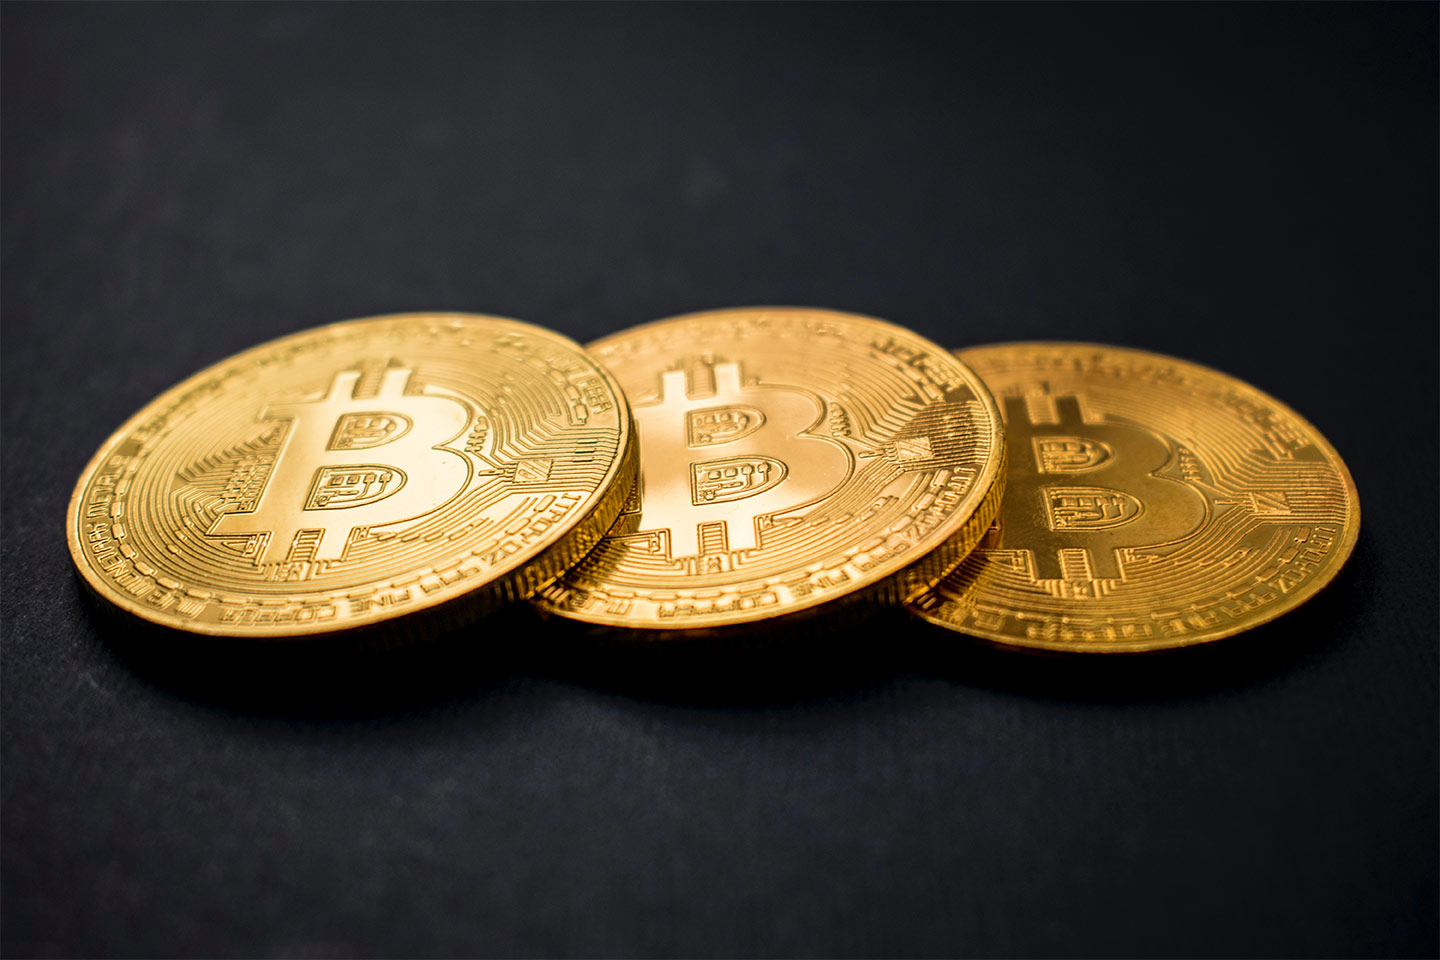 3 coins to beat bitcoin